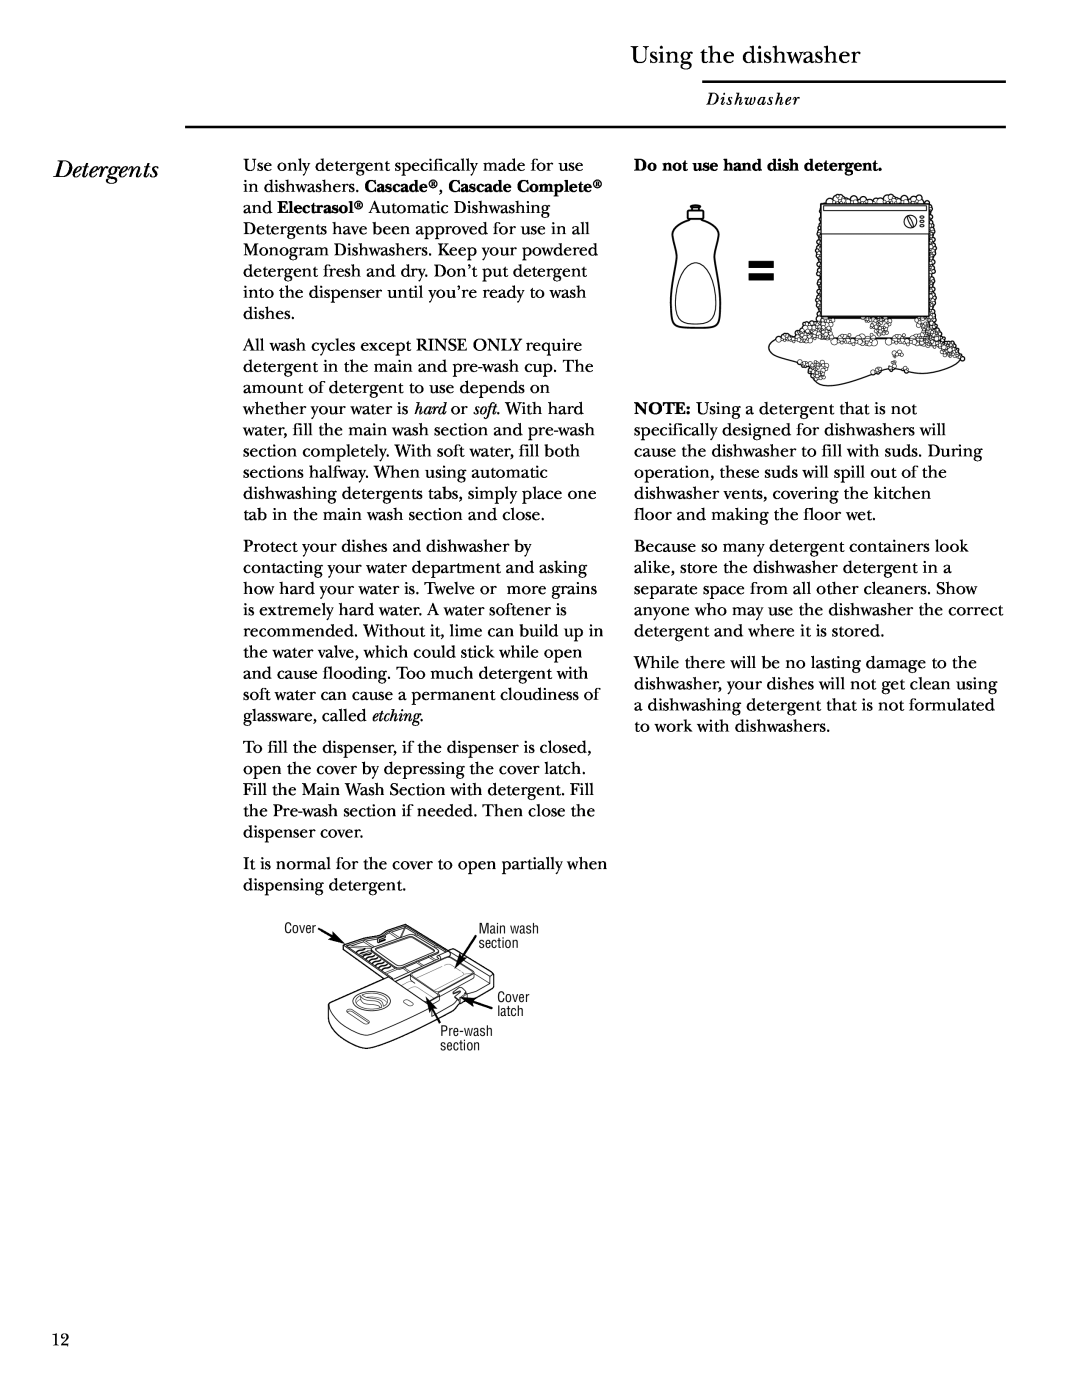 GE zbd6800k owner manual Using the dishwasher, Detergents, Dishwasher 